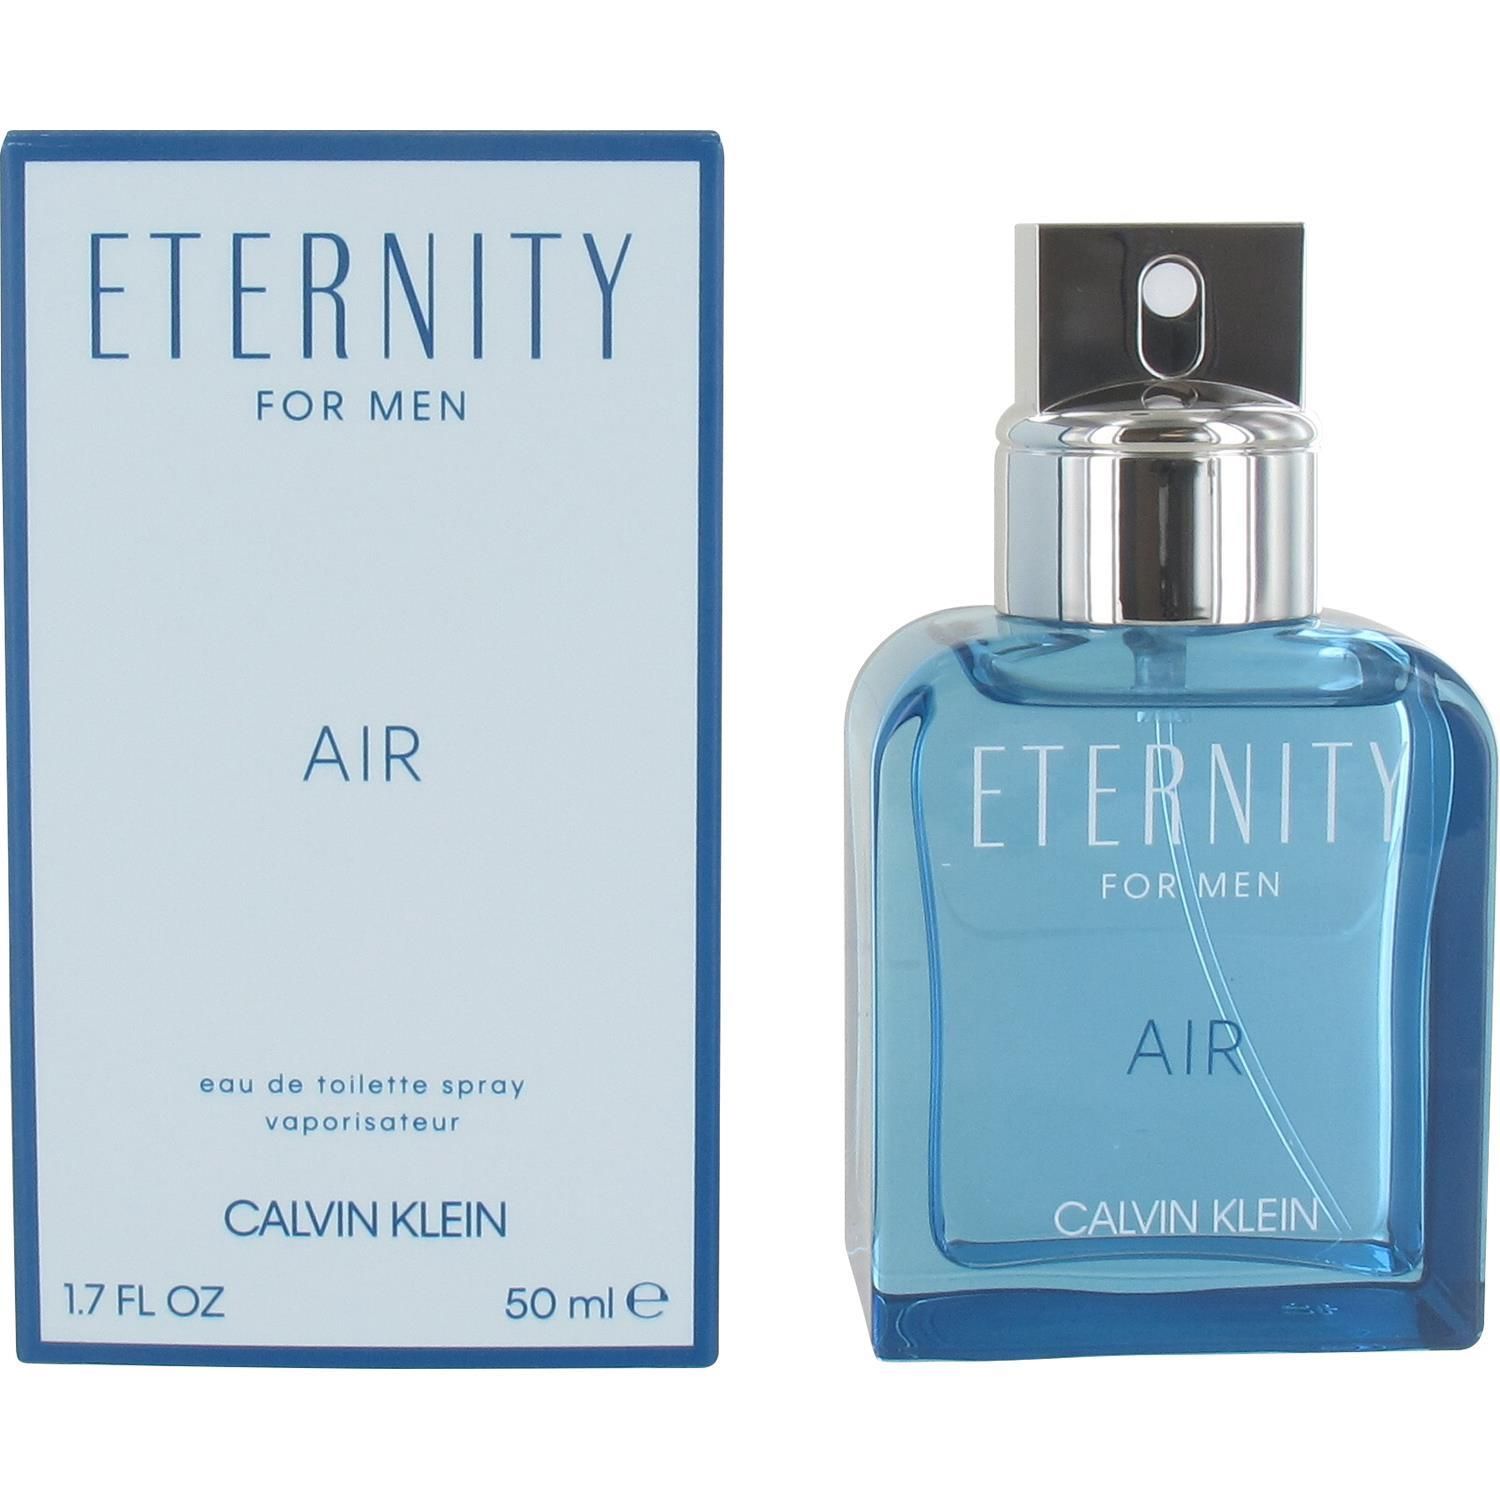 Calvin Klein Eternity Air for Men 50ml Eau de Toilette Spray for Him